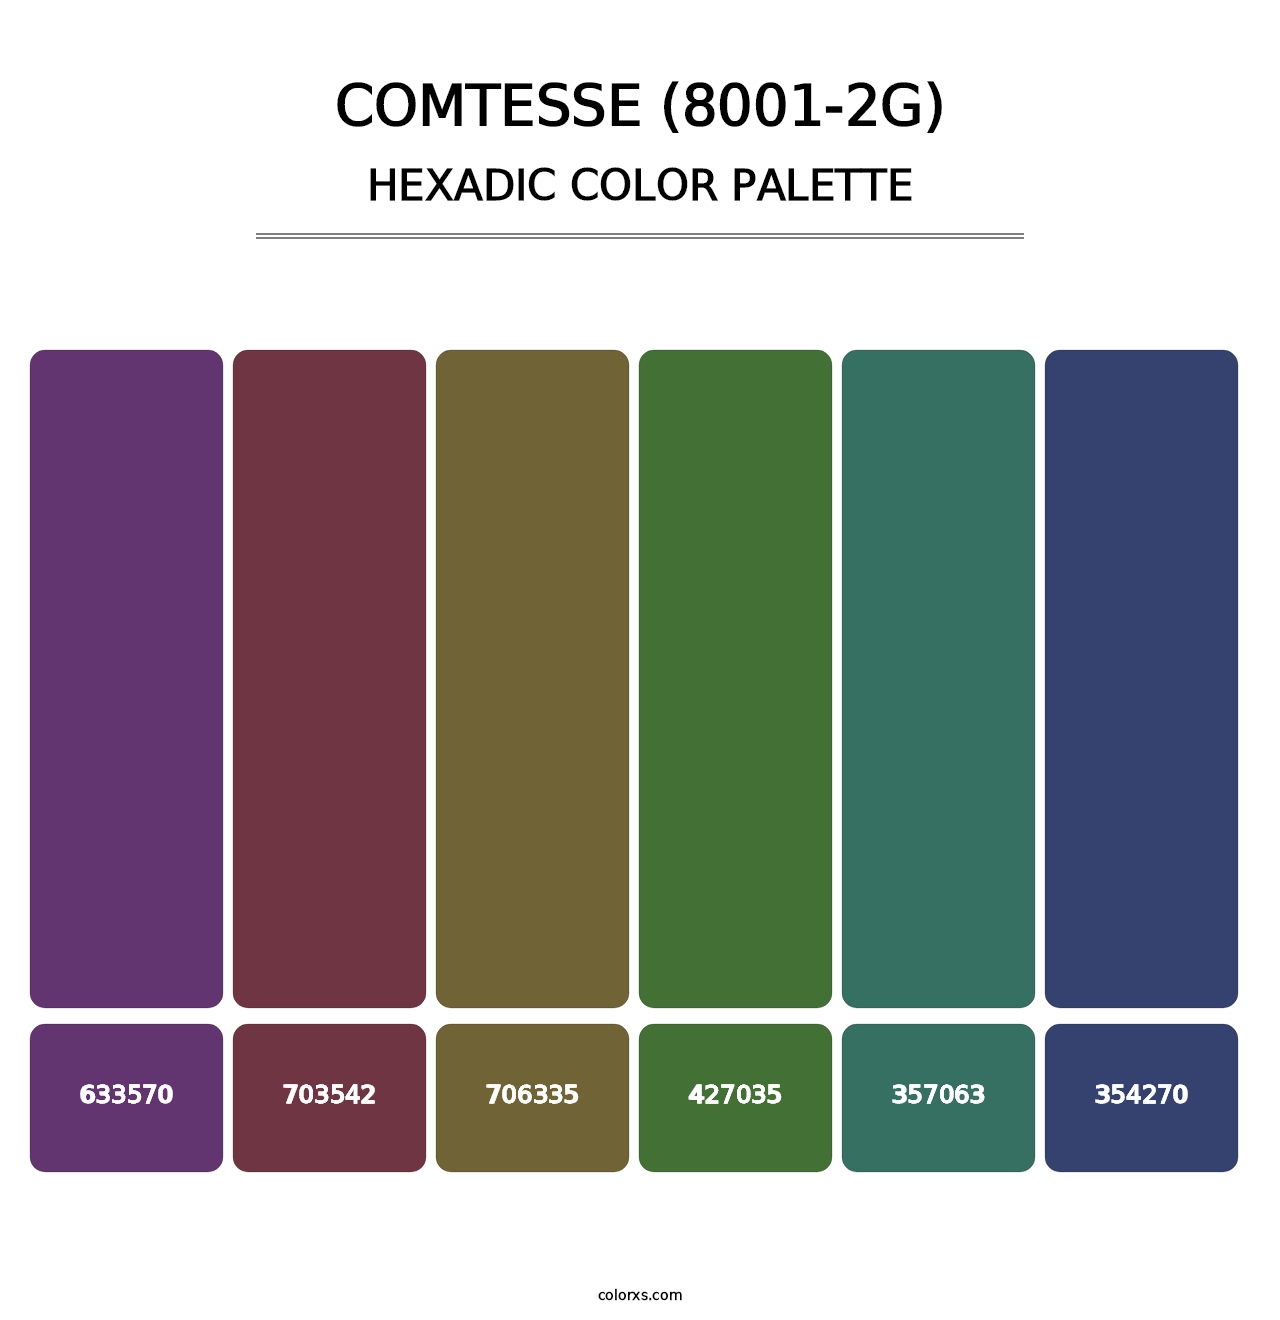 Comtesse (8001-2G) - Hexadic Color Palette